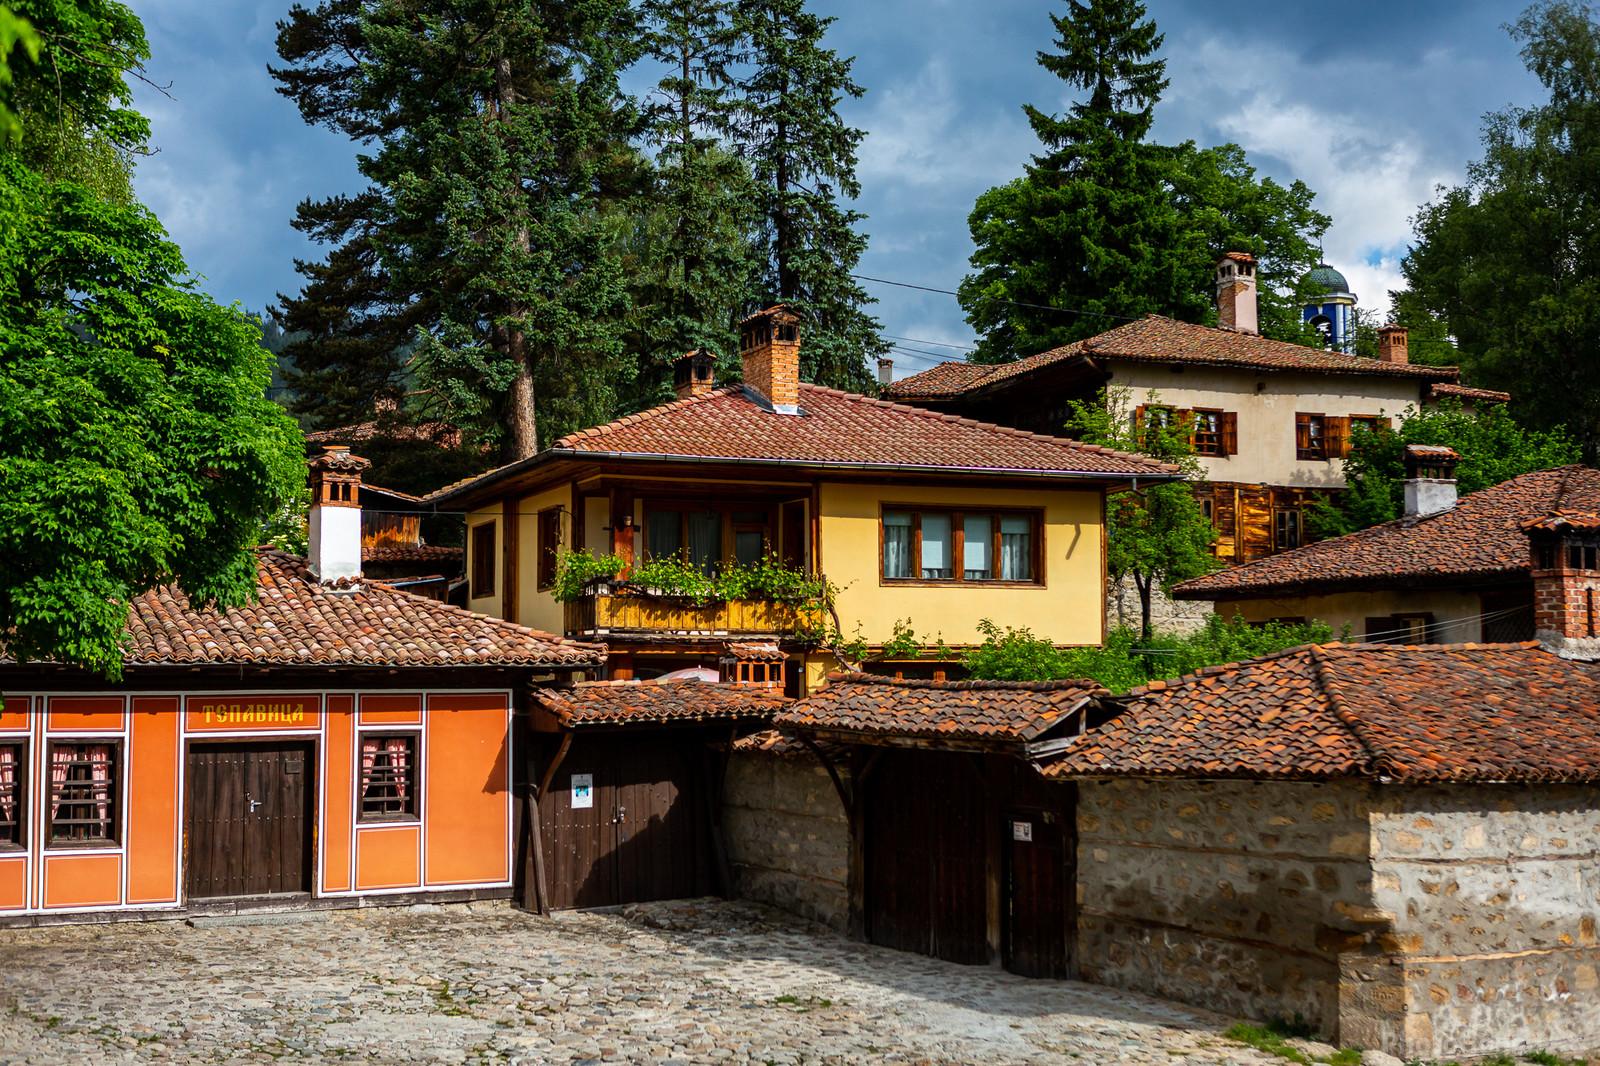 Image of Koprivshtitsa Historic Town by Dancho Hristov